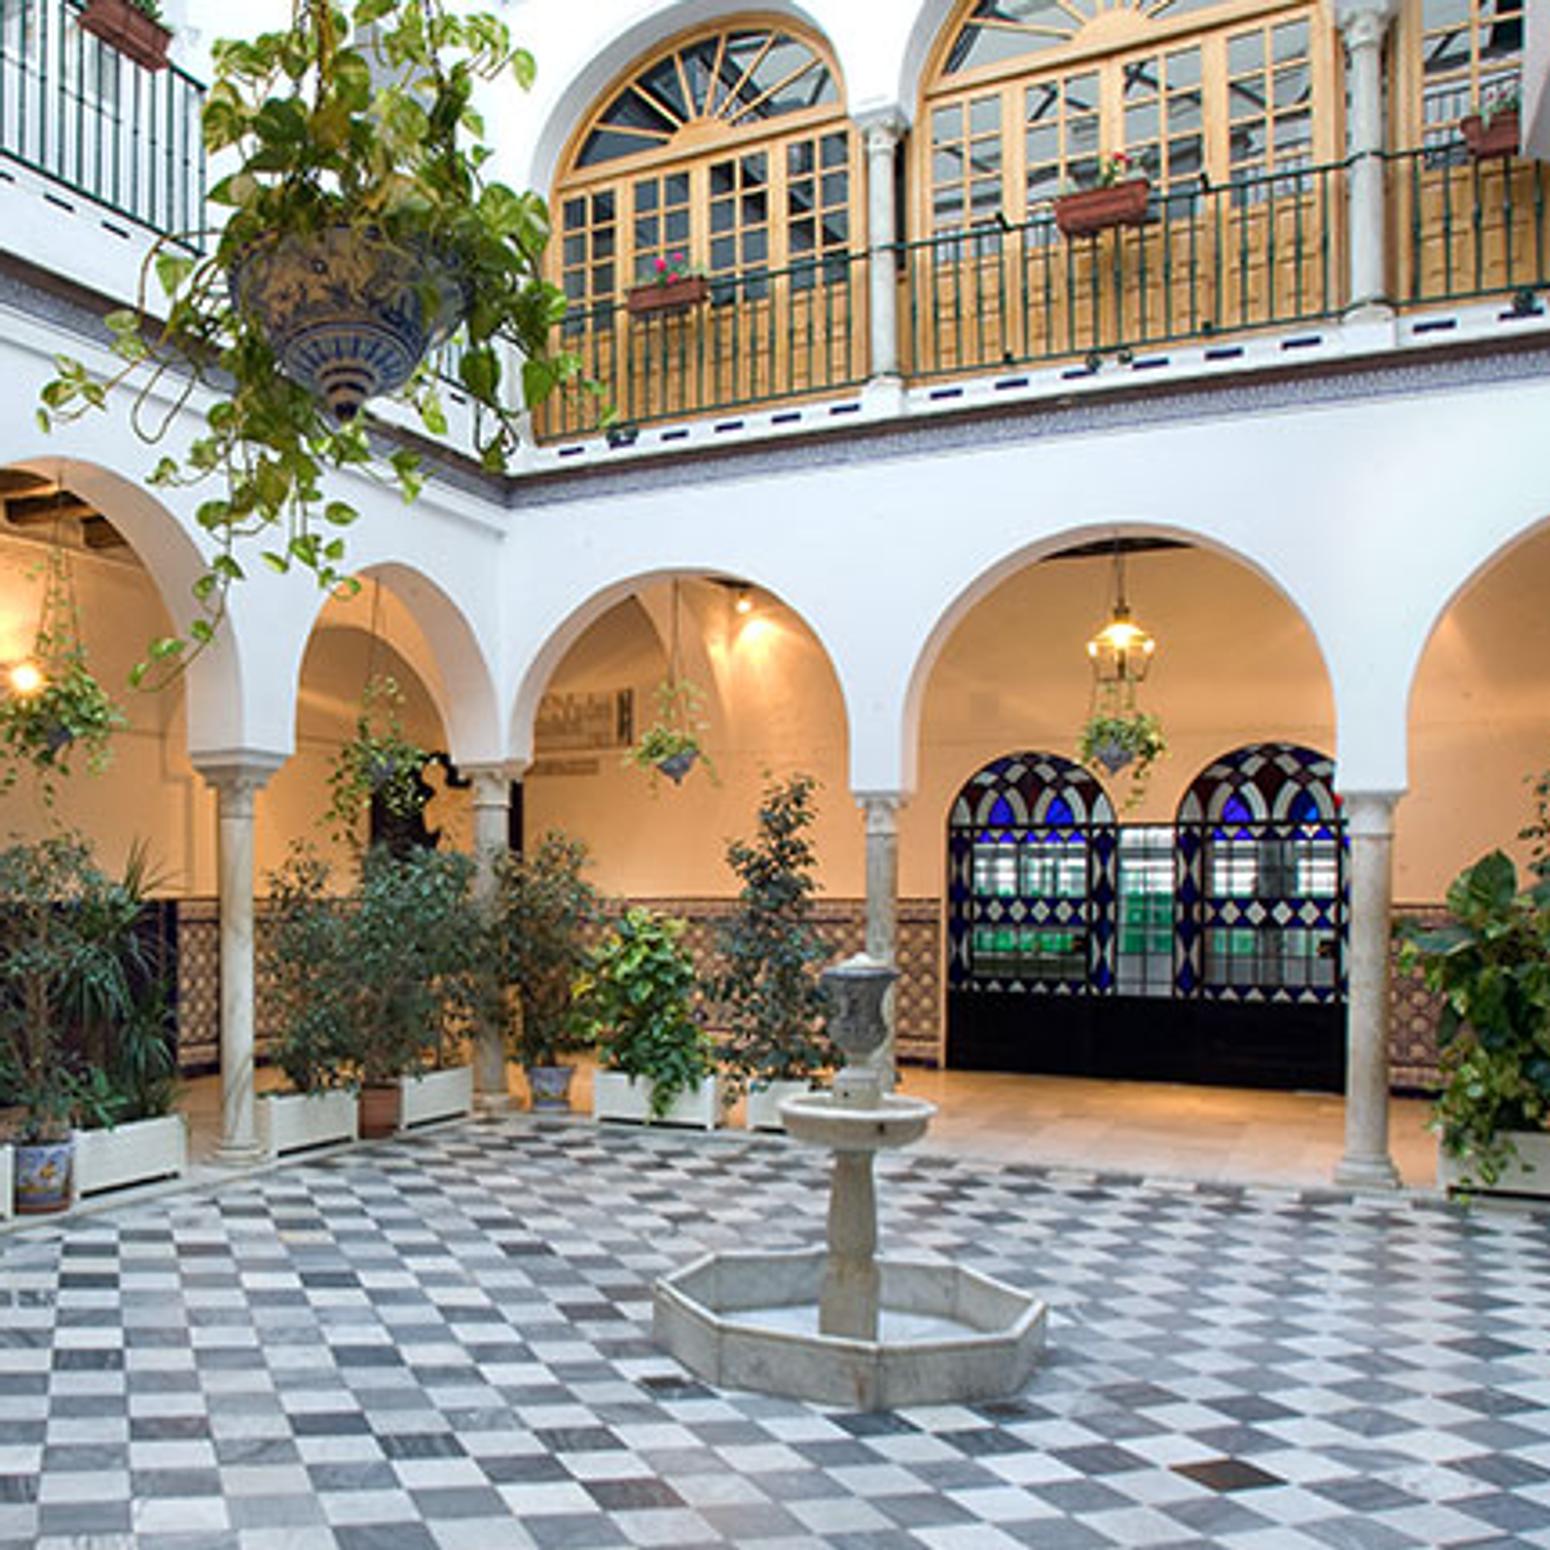 Colegio San Francisco de Paula Atrium mit maurischem Säulengang